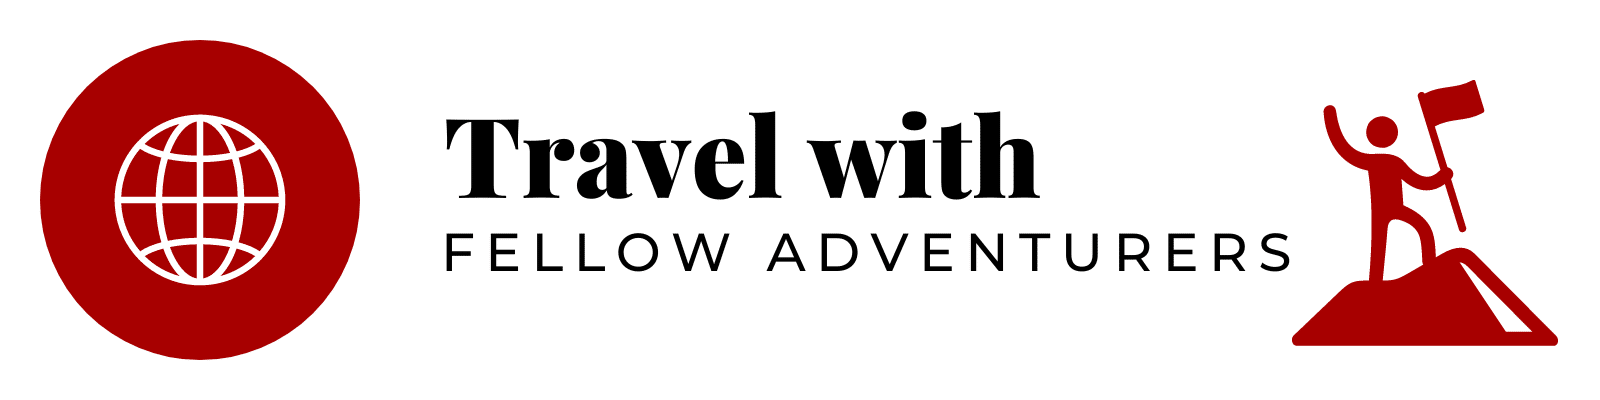 Travel with Fellow Adventurers